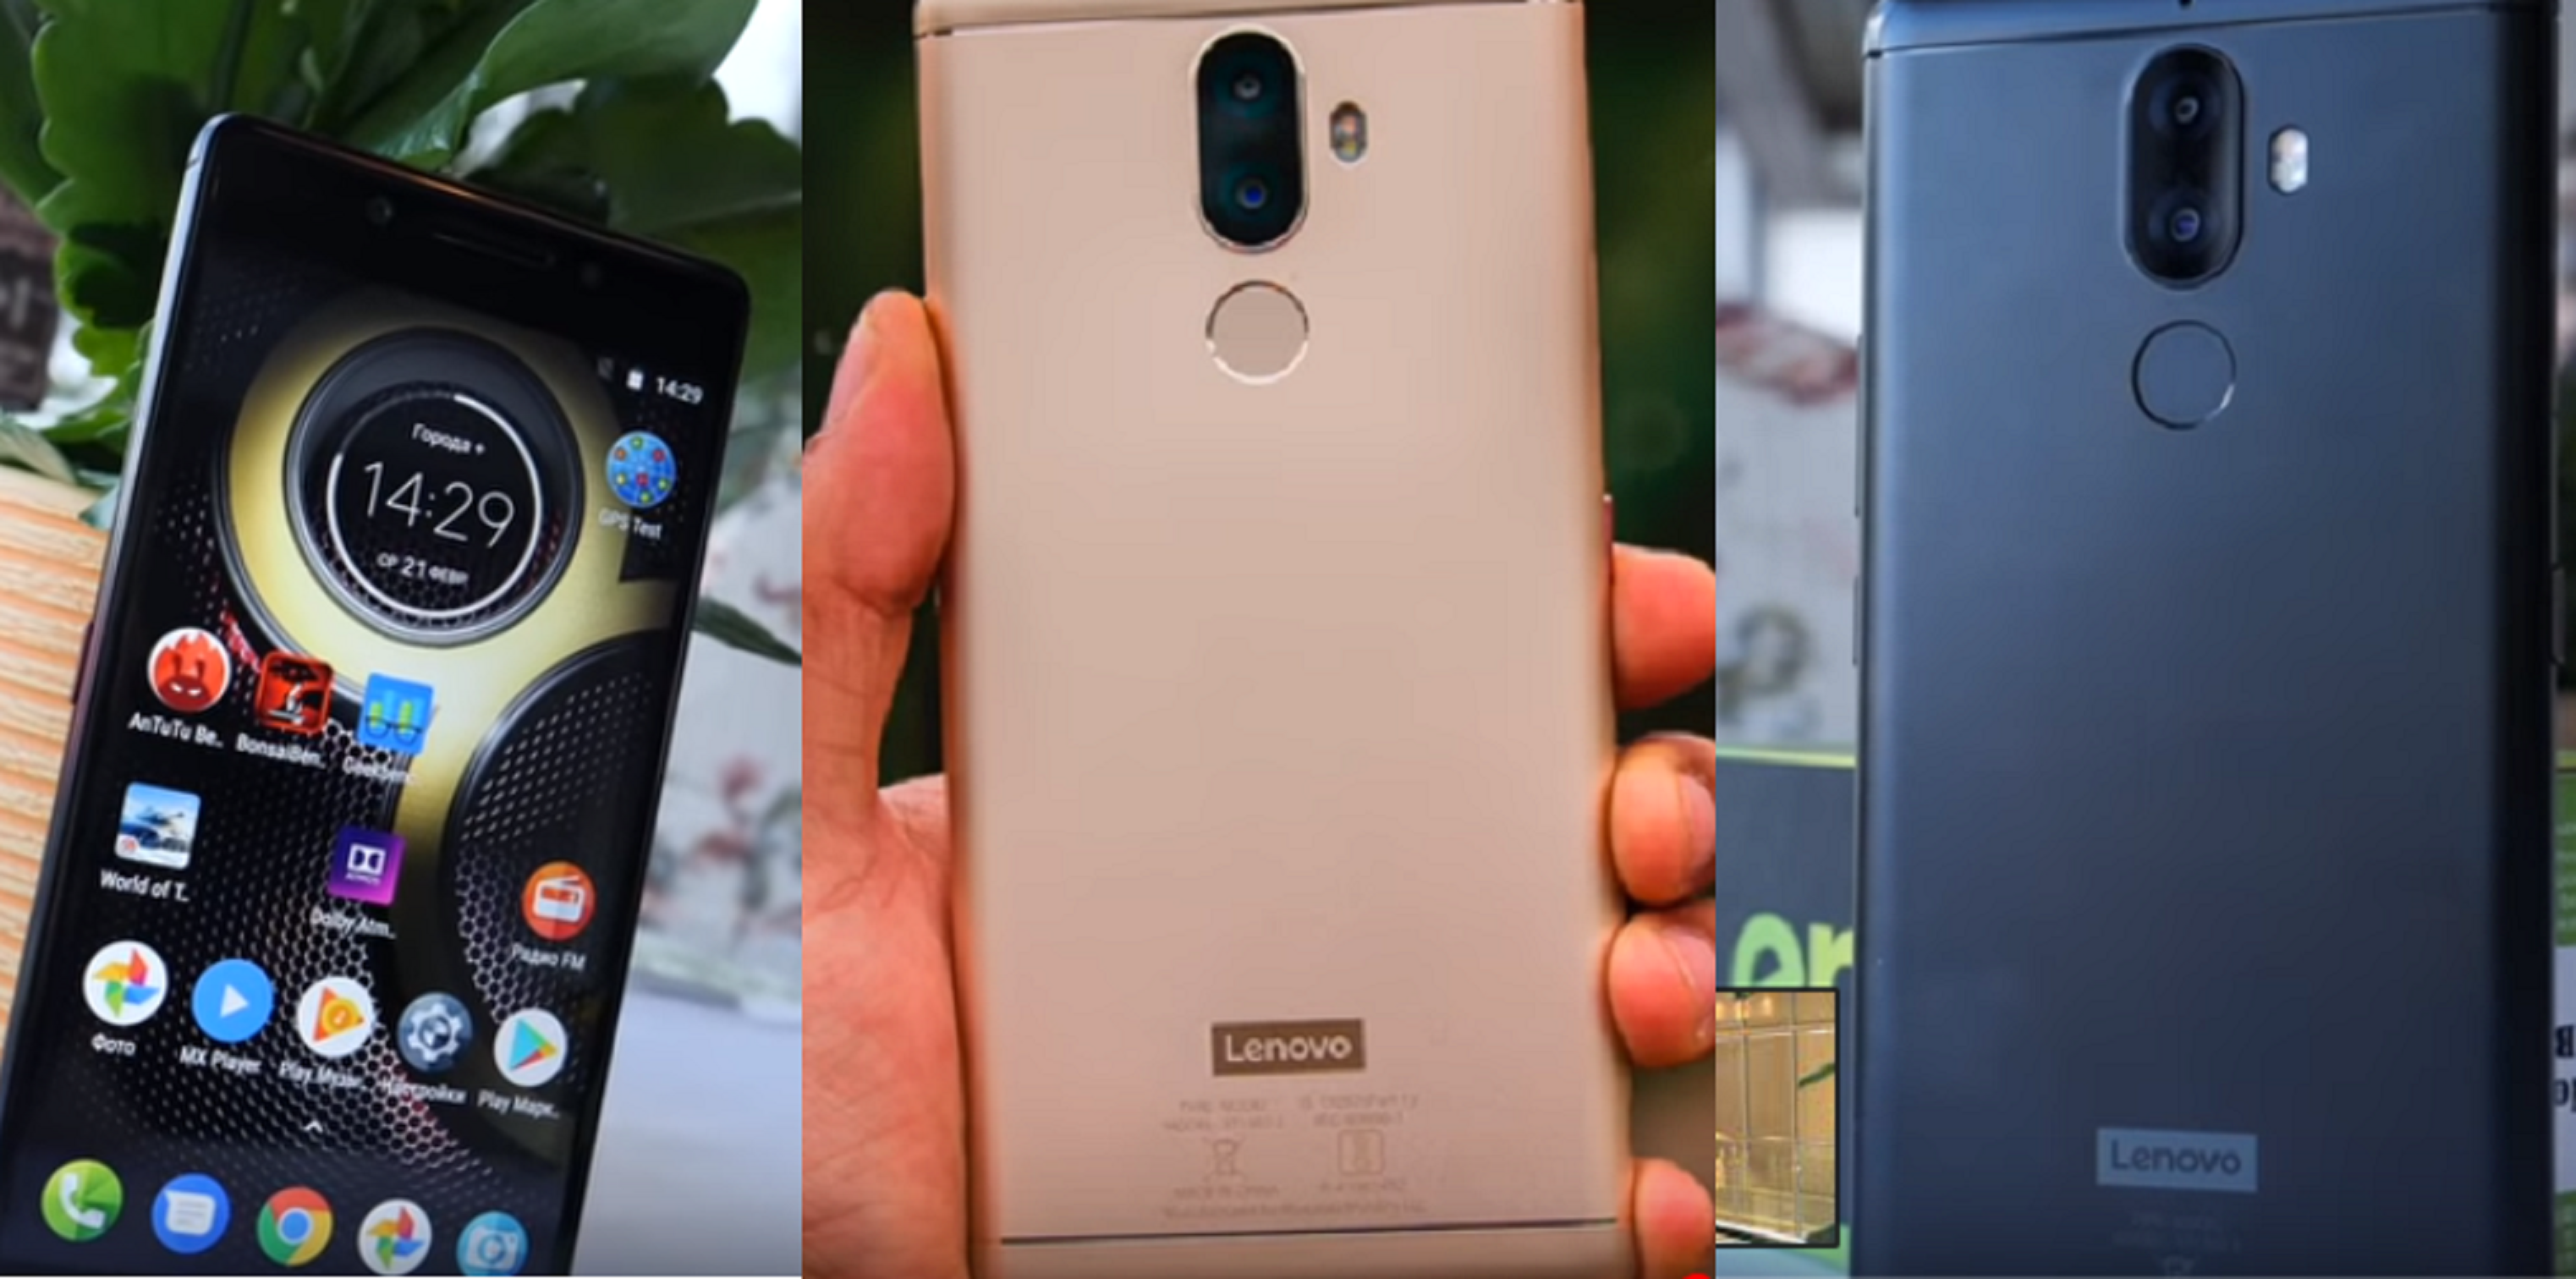 Smartphone Lenovo K8 Note 64GB - advantages and disadvantages